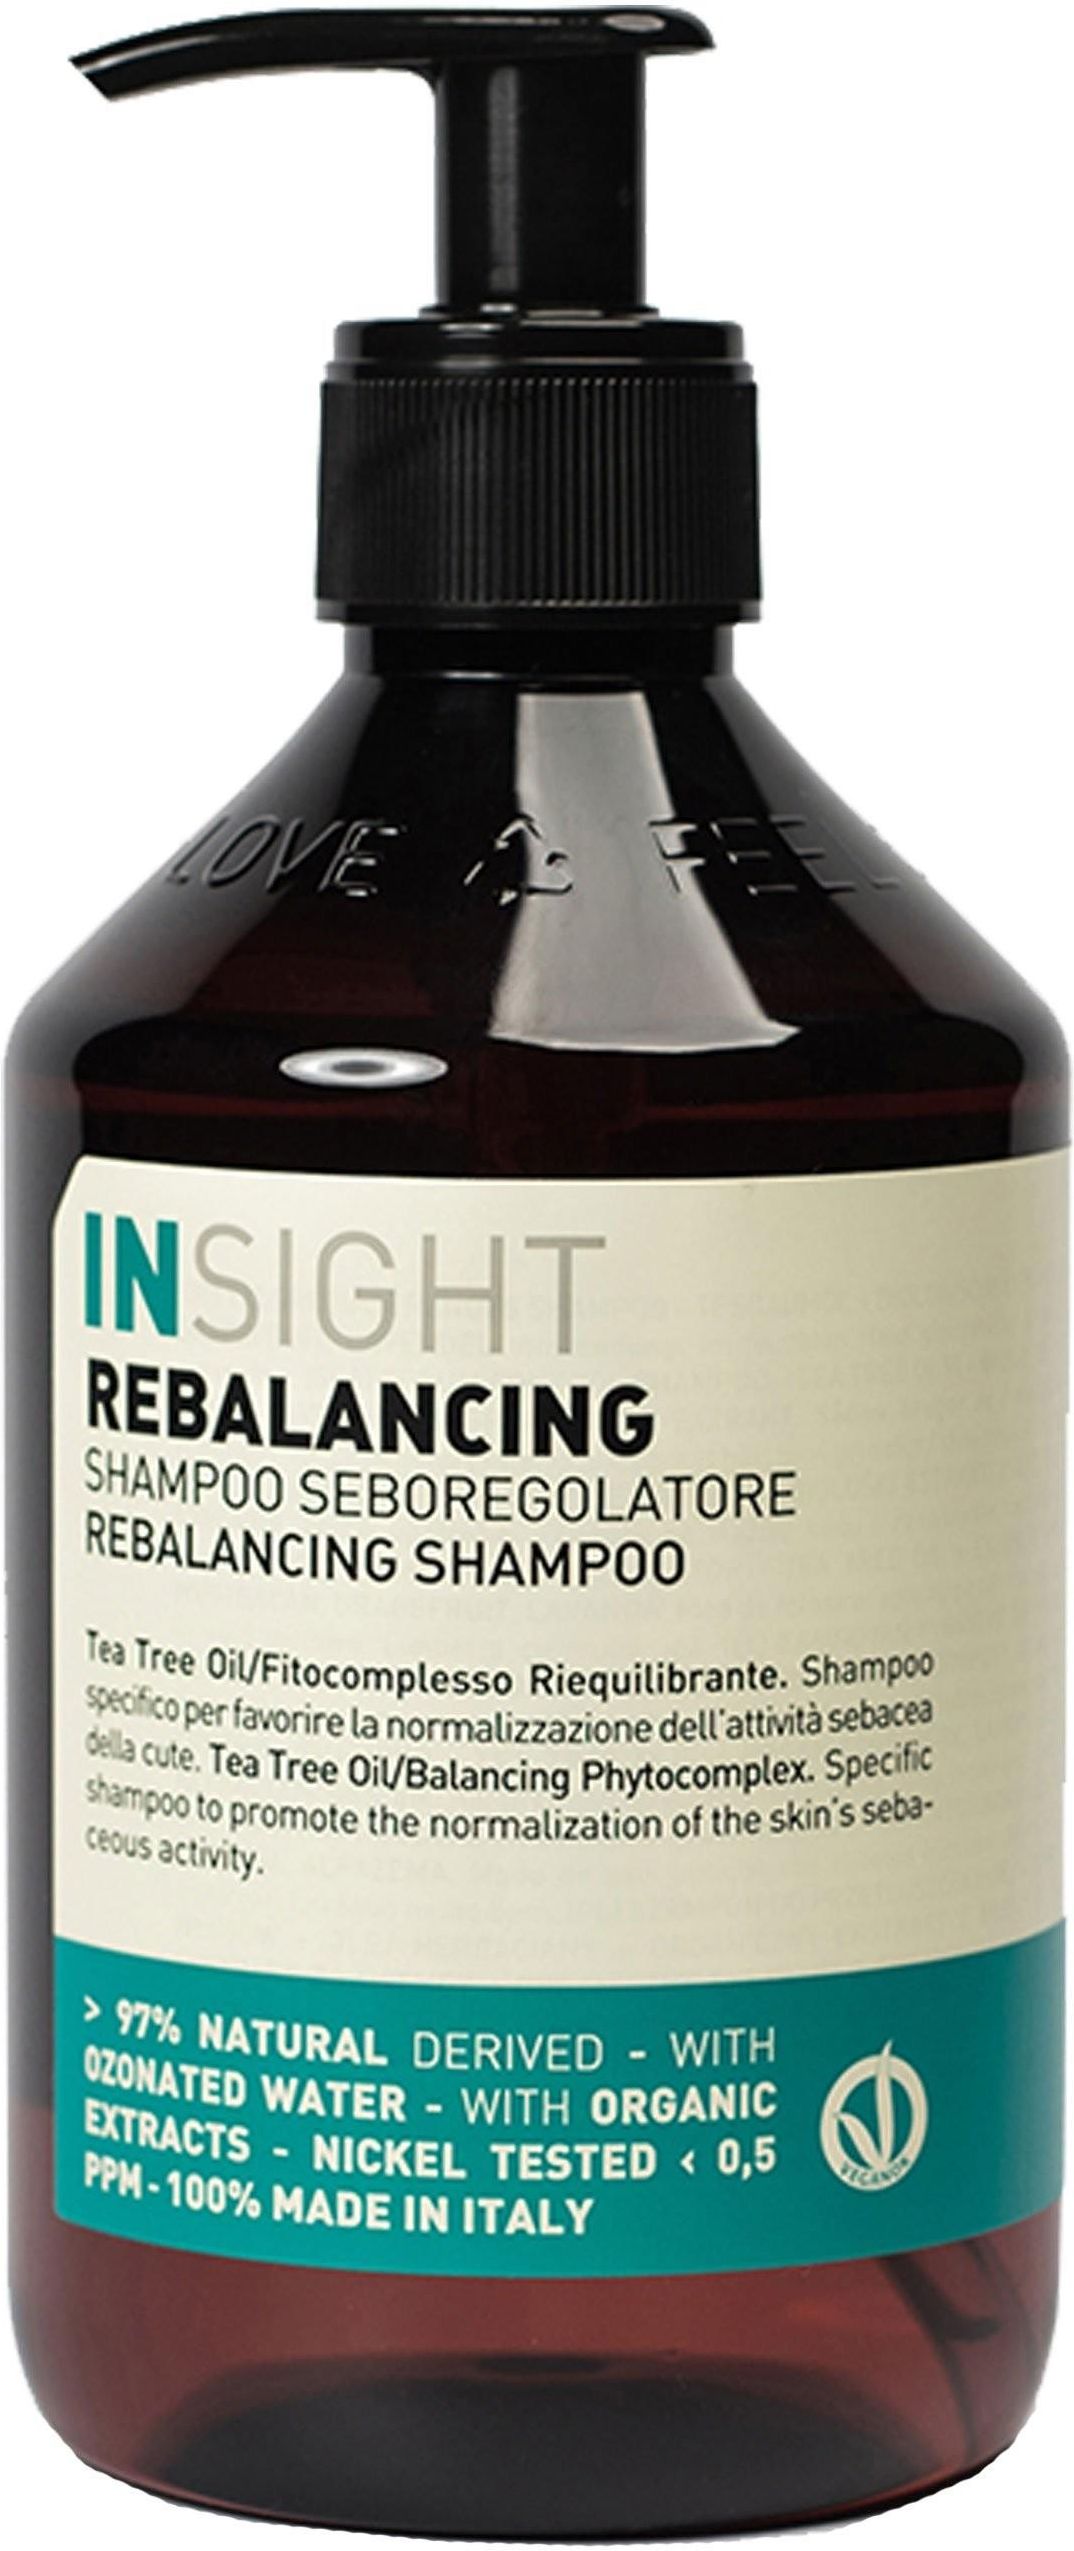 insight rebalancing szampon wizaz